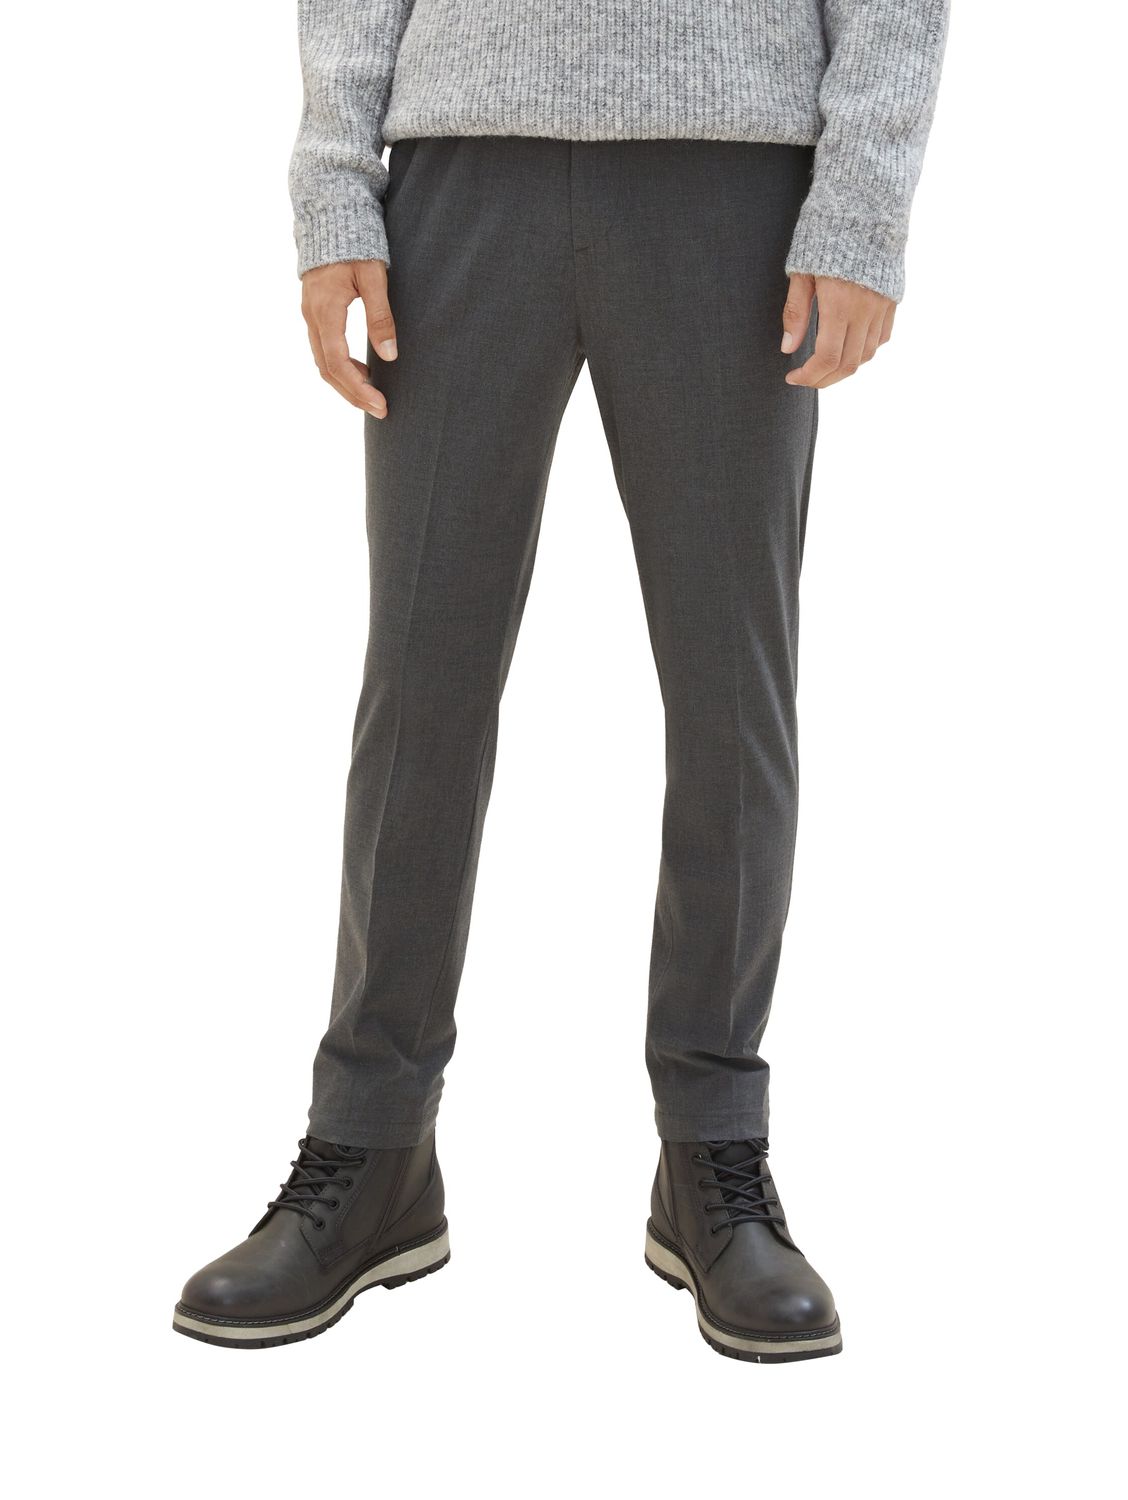 Тканевые брюки TOM TAILOR Denim Stoff/Chino RELAXED TAPERED CHINO comfort/relaxed, серый толстовка tom tailor размер xs серый